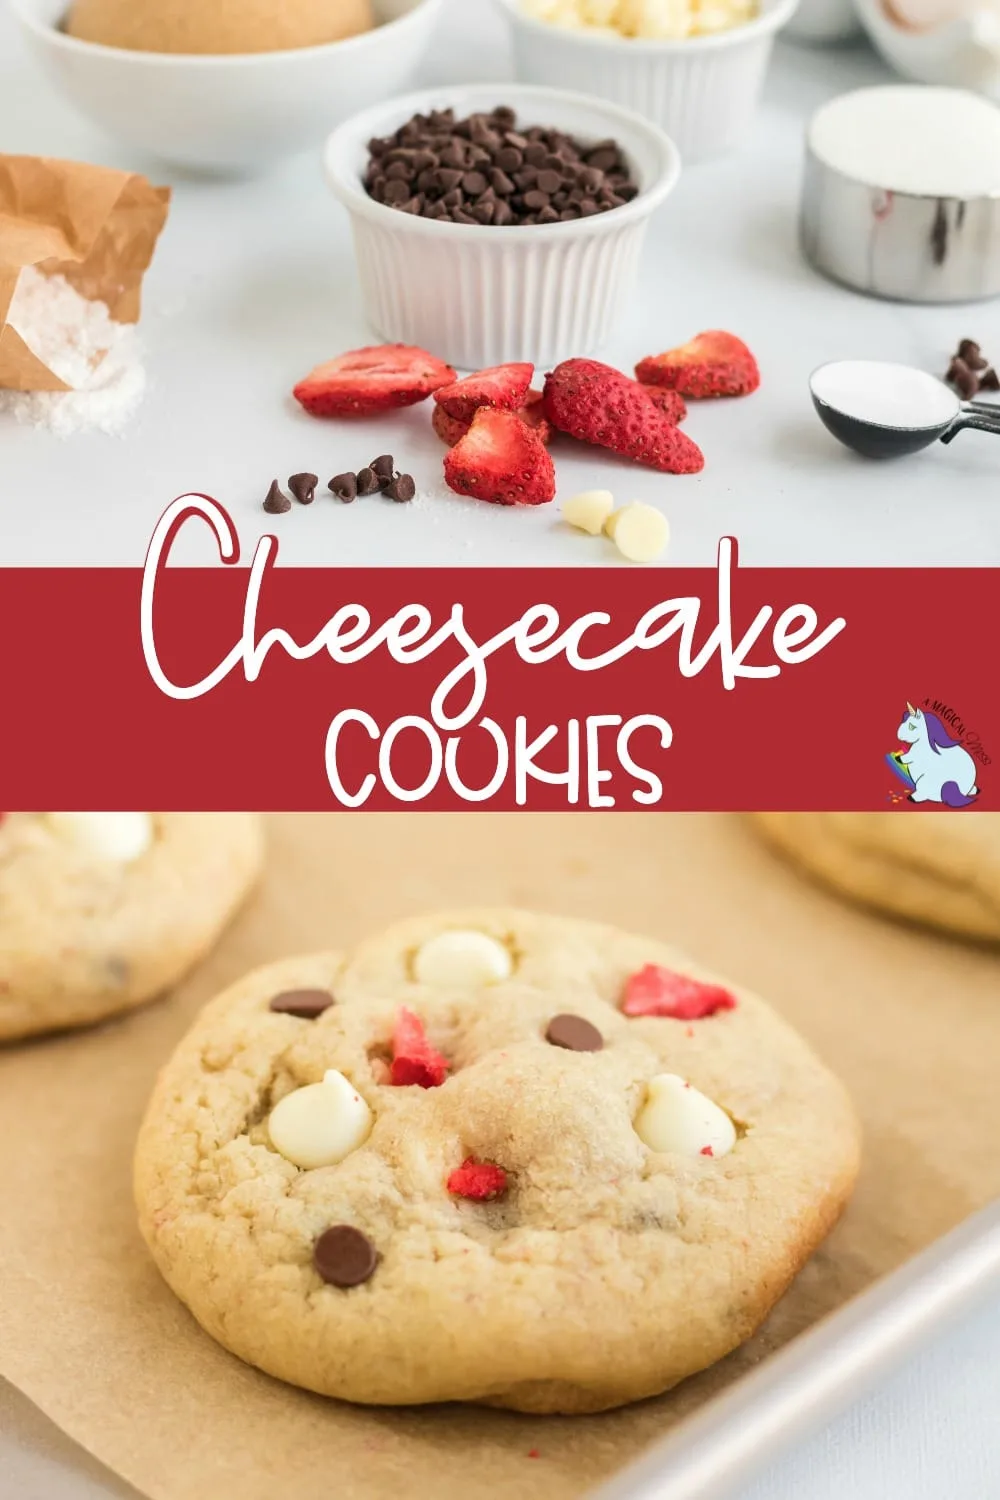 Cheesecake cookie ingredients and baked cookie.